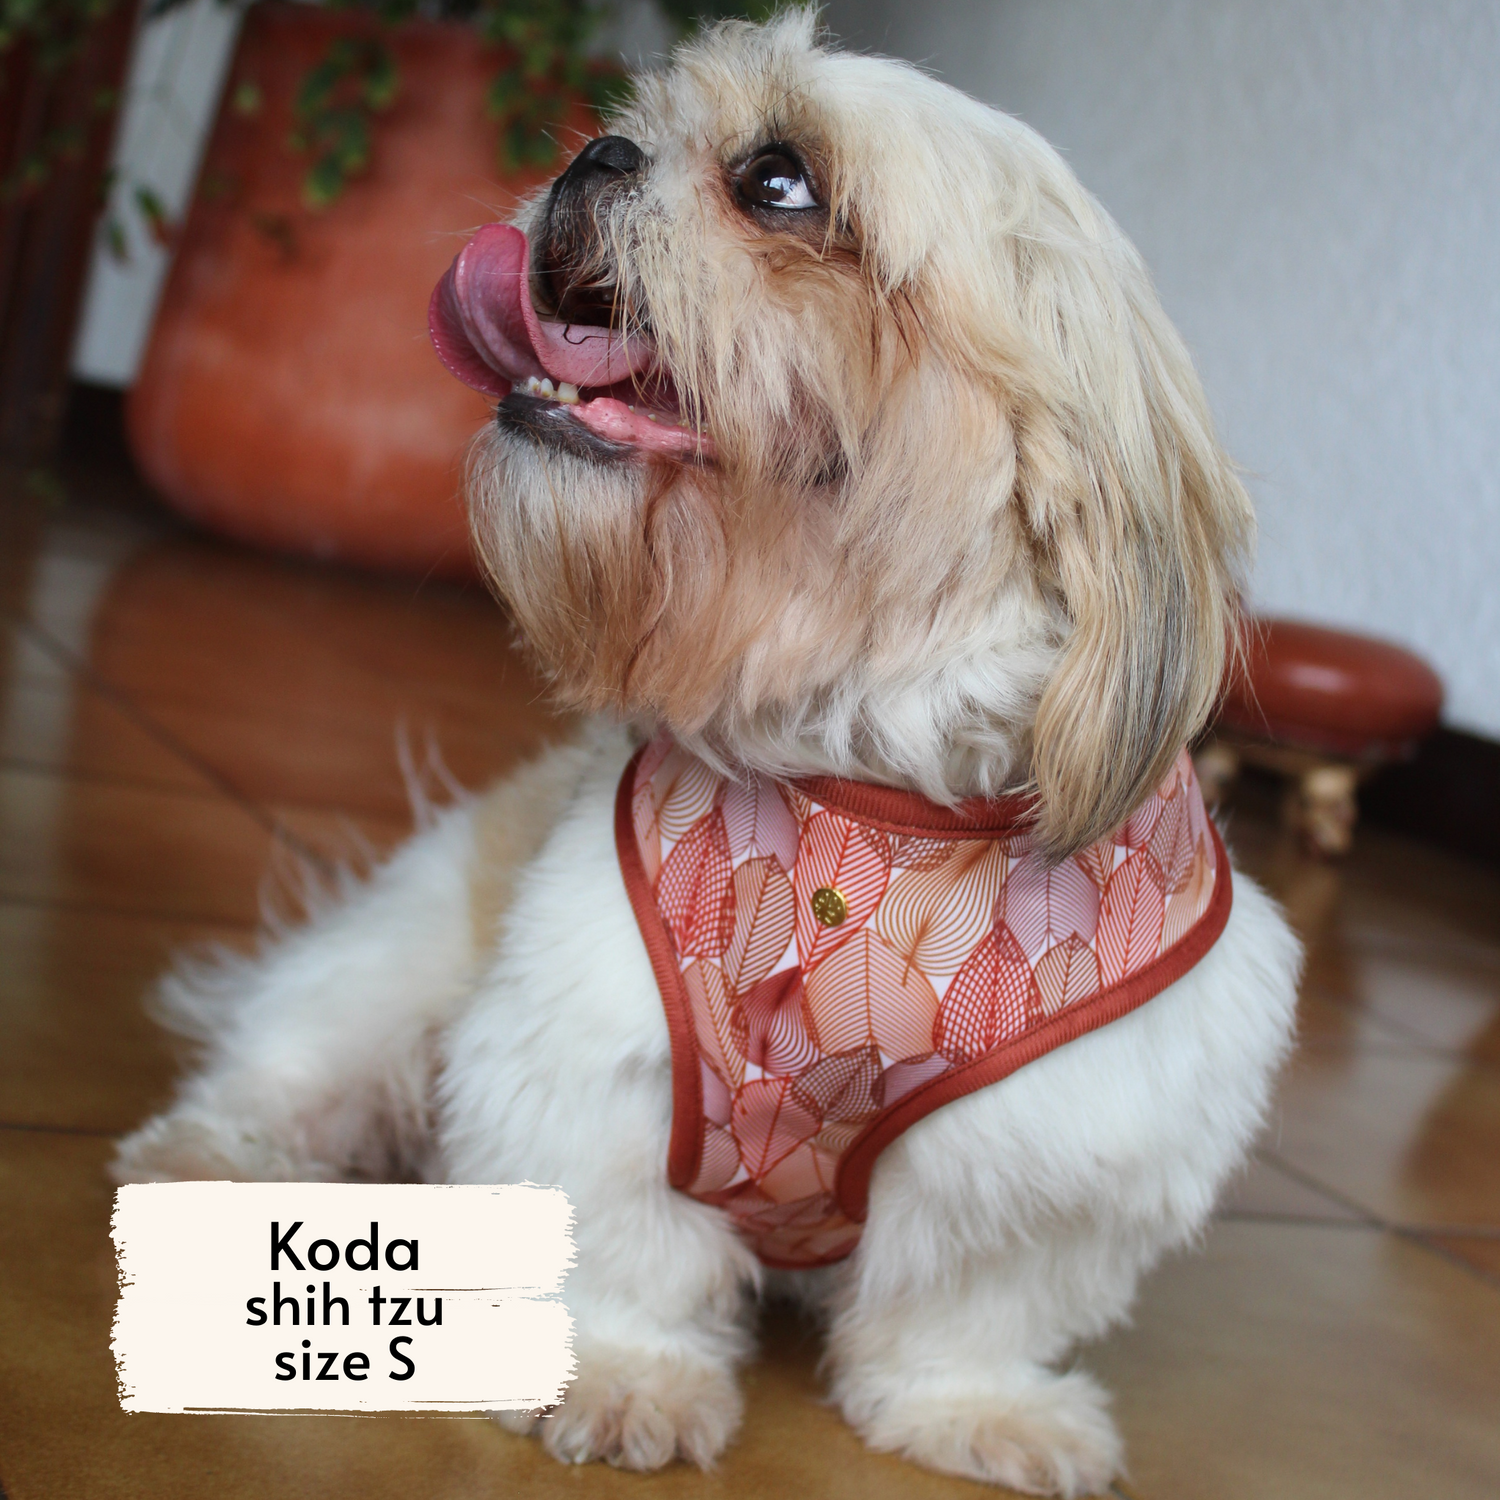 Pata Paw autumn crunch harness as seen on a small dog, Koda, a shih tzu.